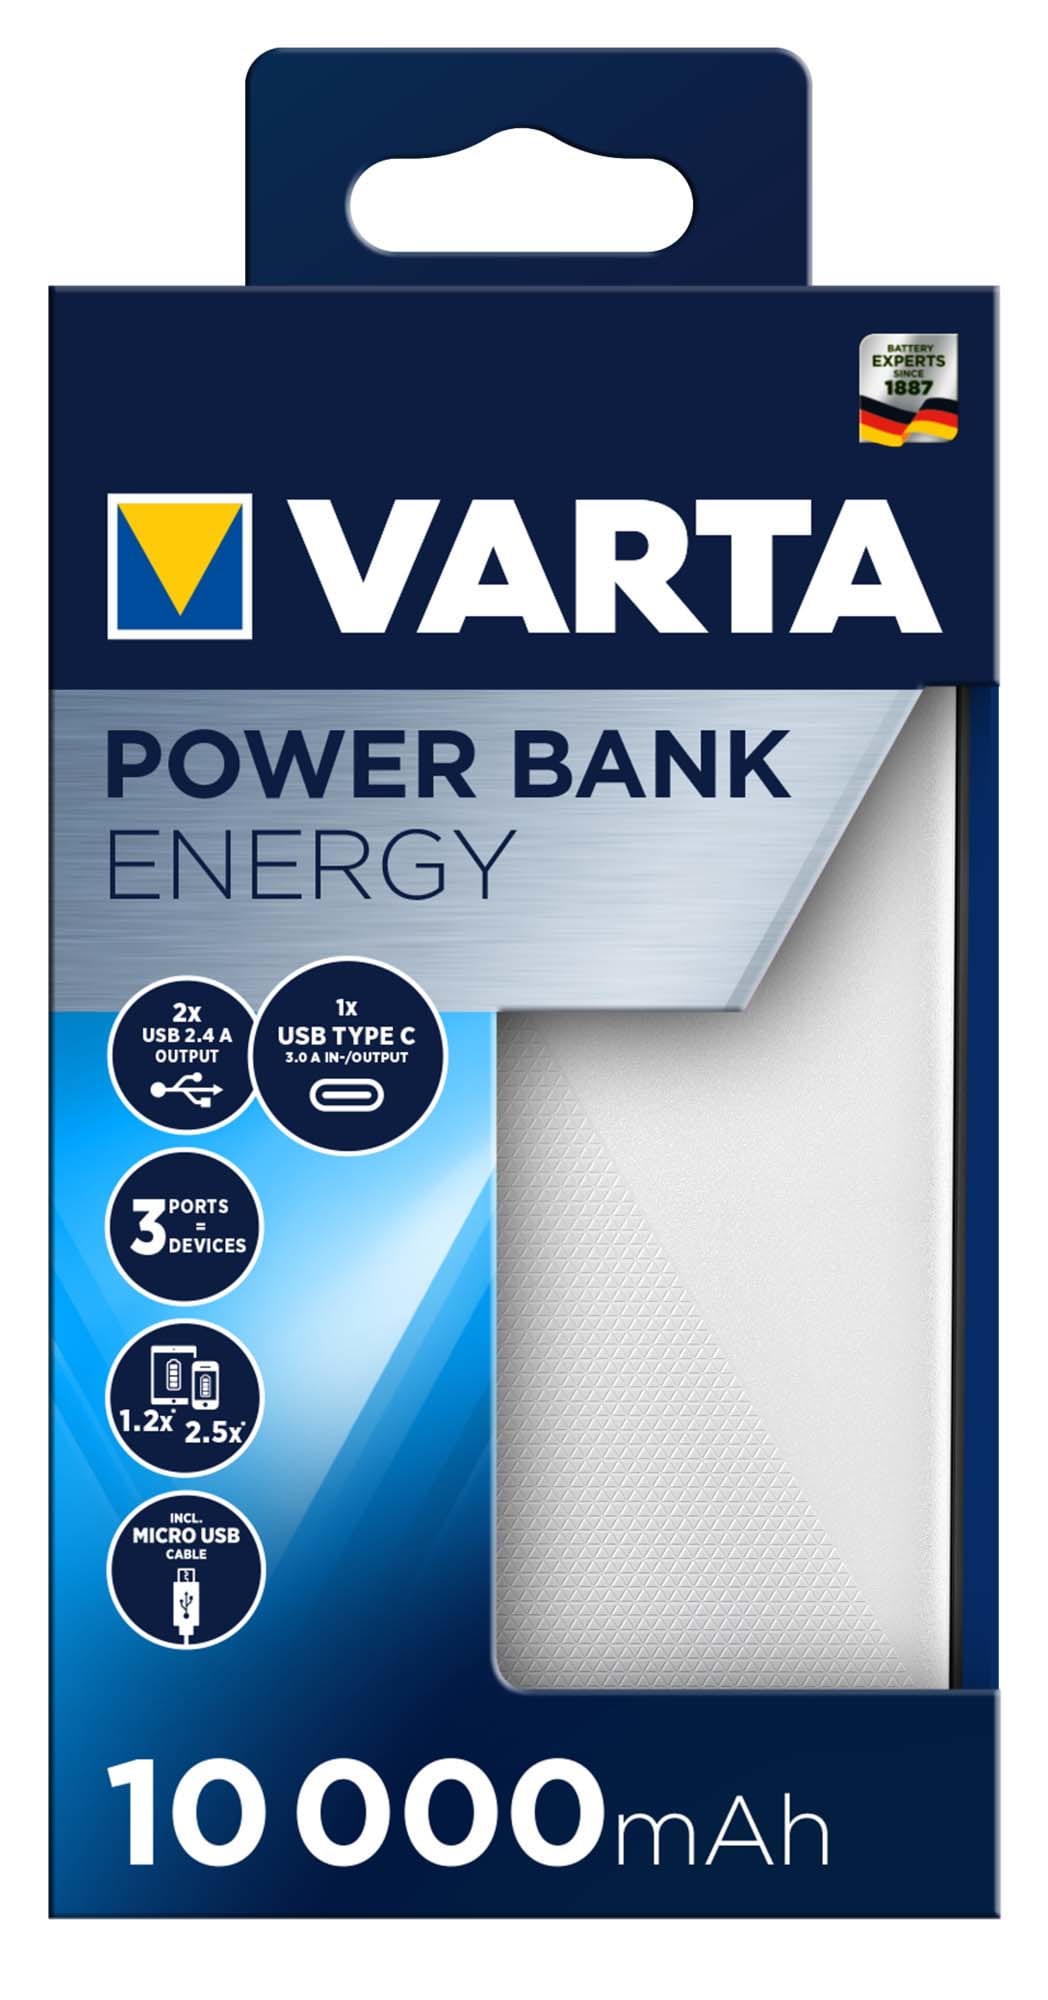 Varta - POWER BANK ENERGY 10000 mAh- cable Micro USB inclus